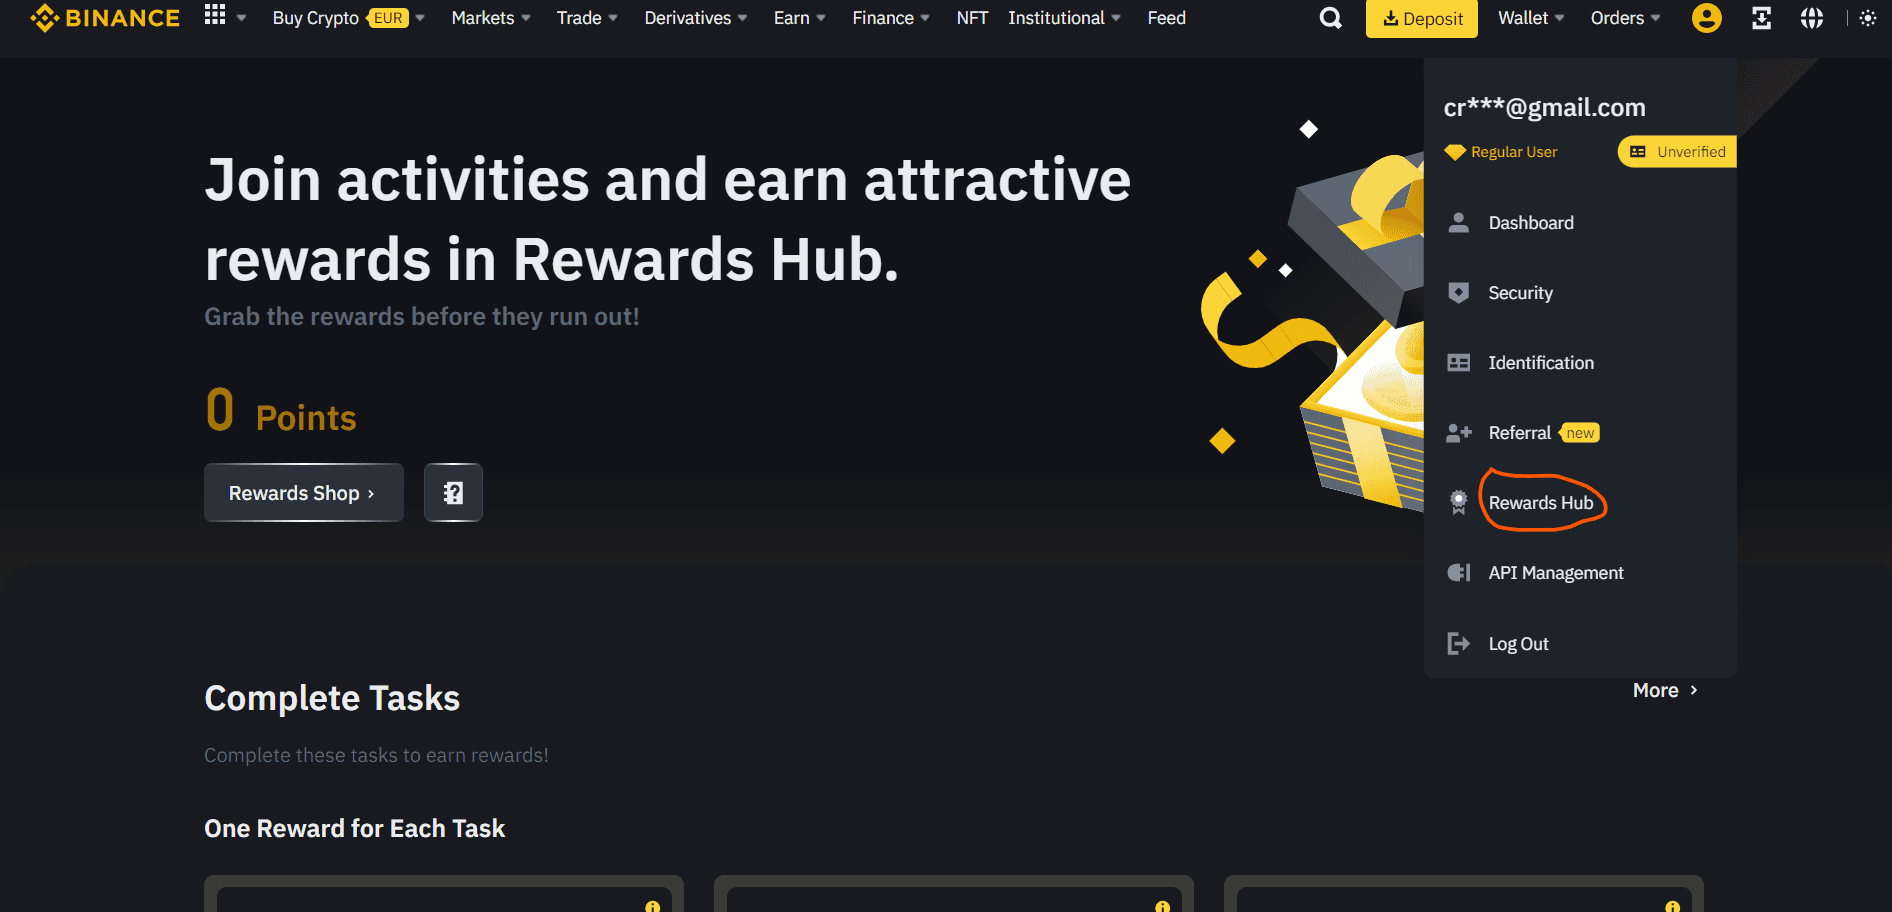 Image of Binance rewards page